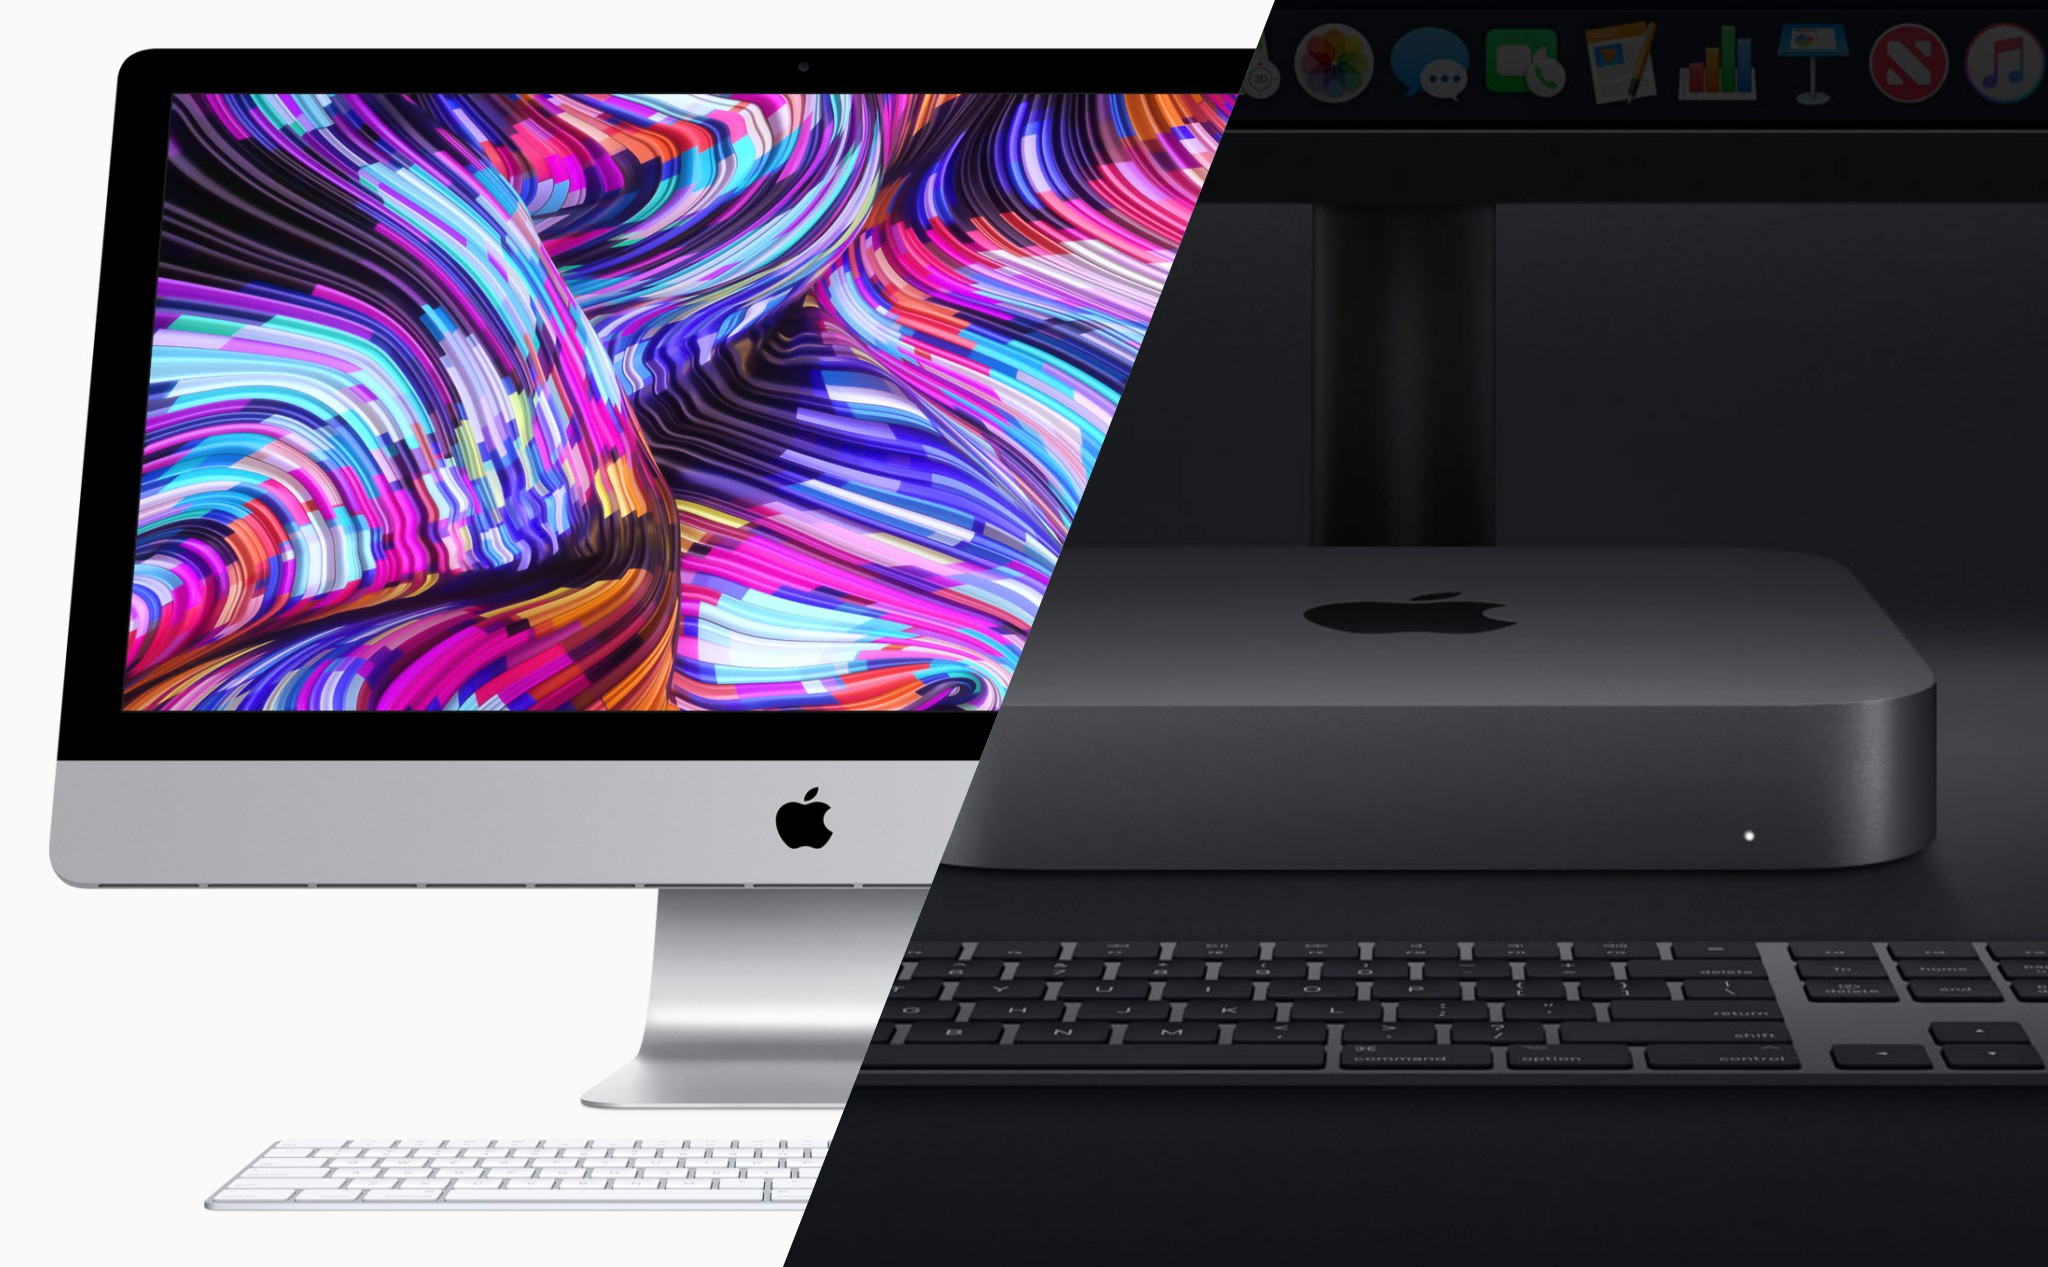 Tư vấn: Mac Mini hay iMac?